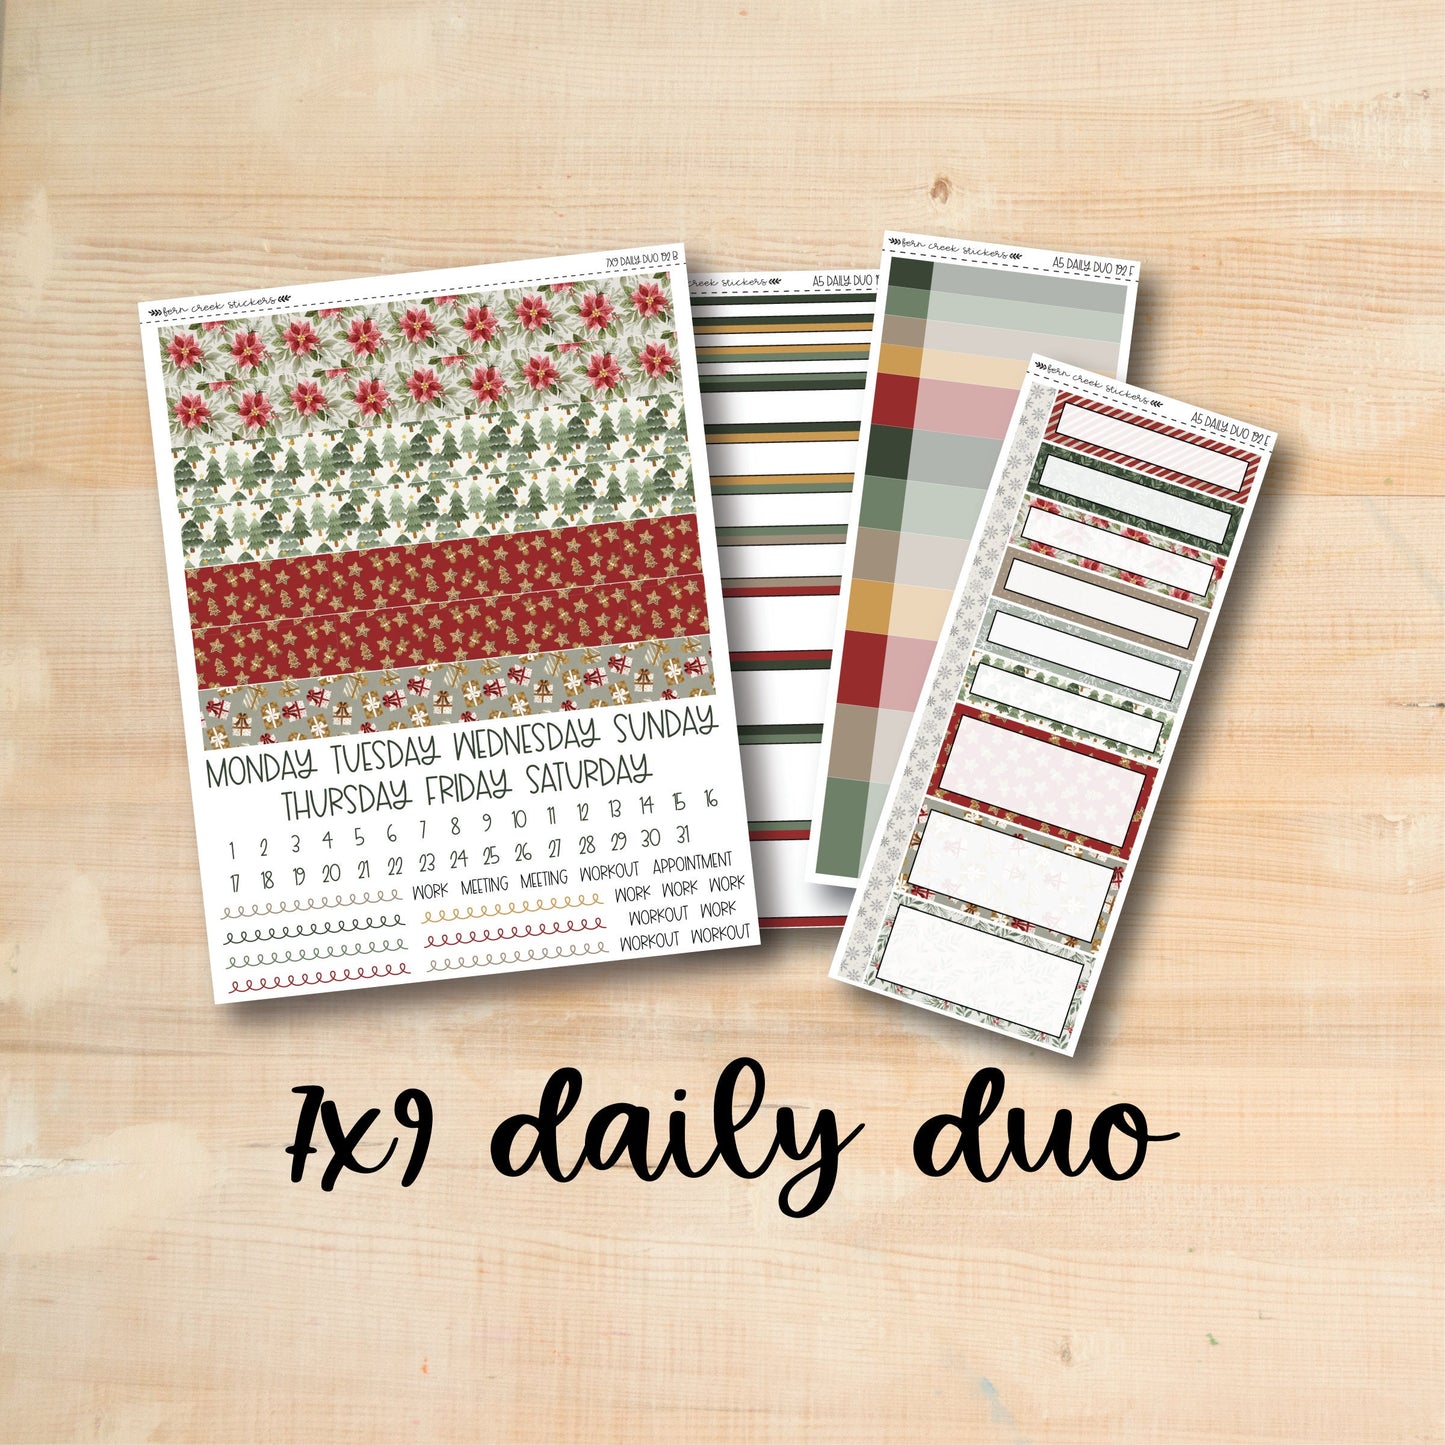 7x9 Daily Duo 192 || CHRISTMAS CHEER 7x9 Daily Duo Kit